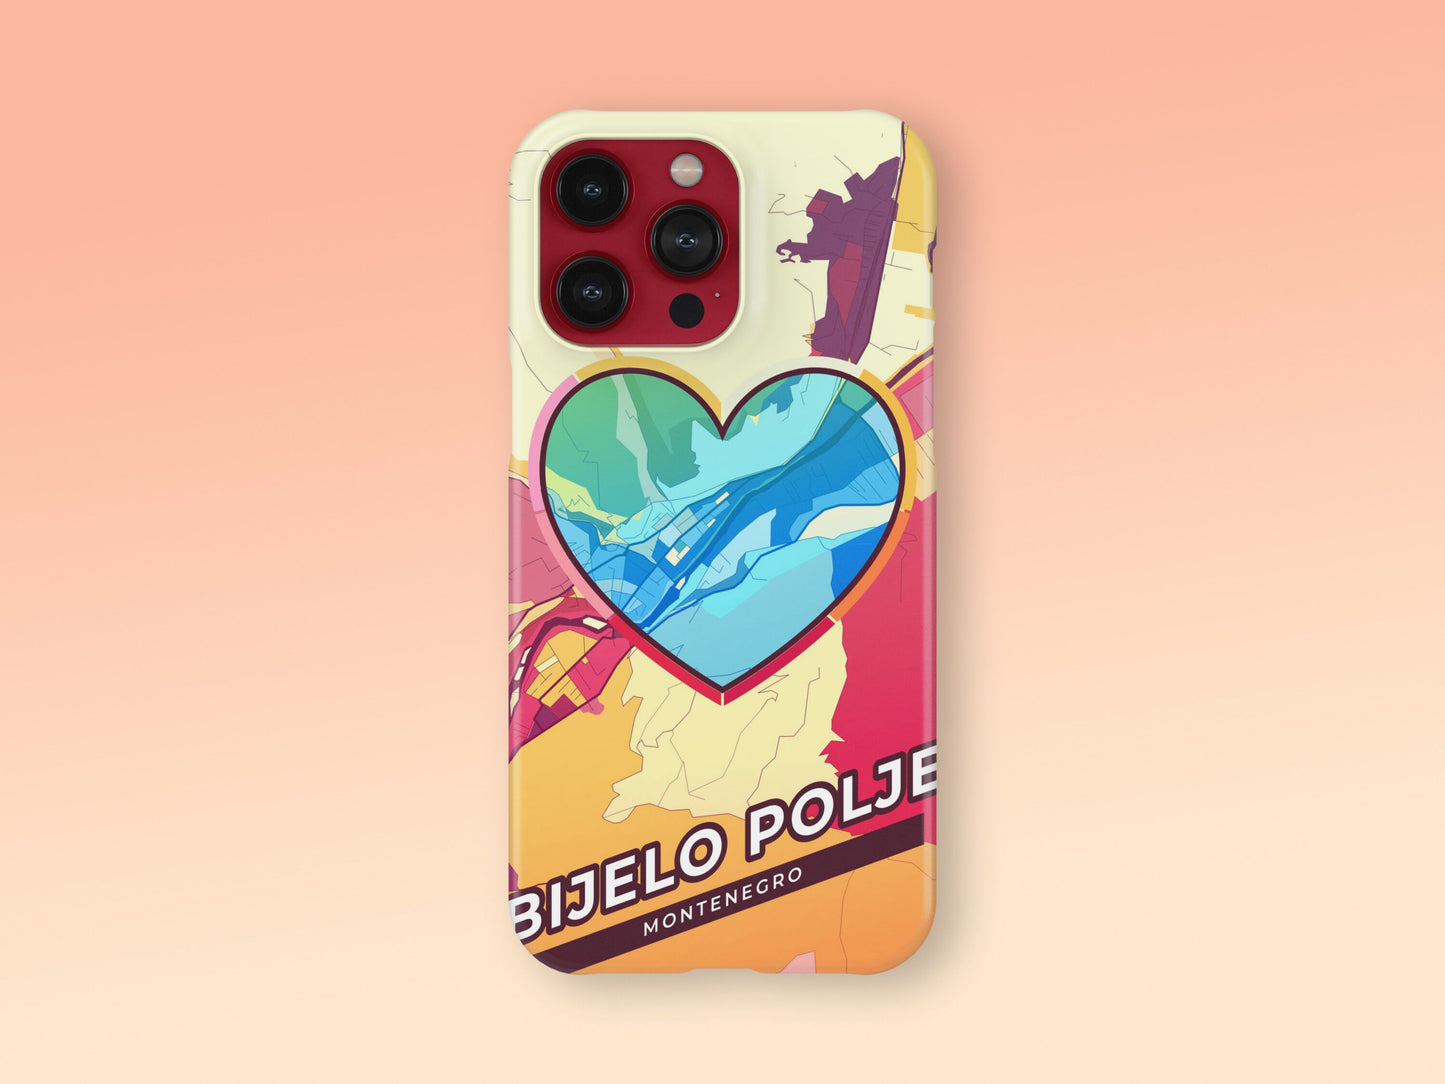 Bijelo Polje Montenegro slim phone case with colorful icon. Birthday, wedding or housewarming gift. Couple match cases. 2